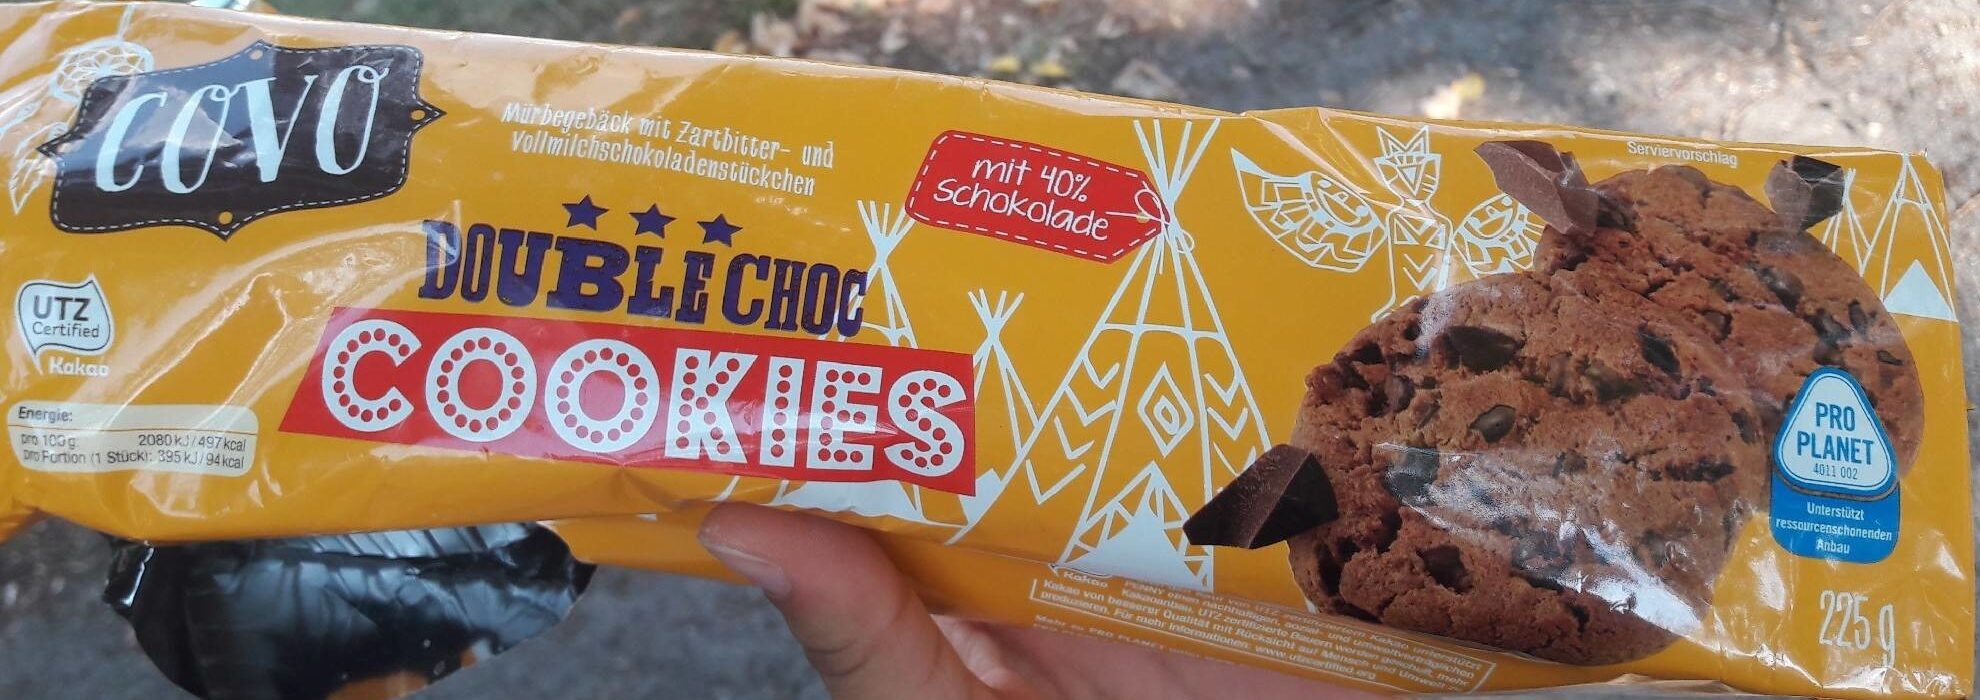 Double Choc Cookies - Produkt